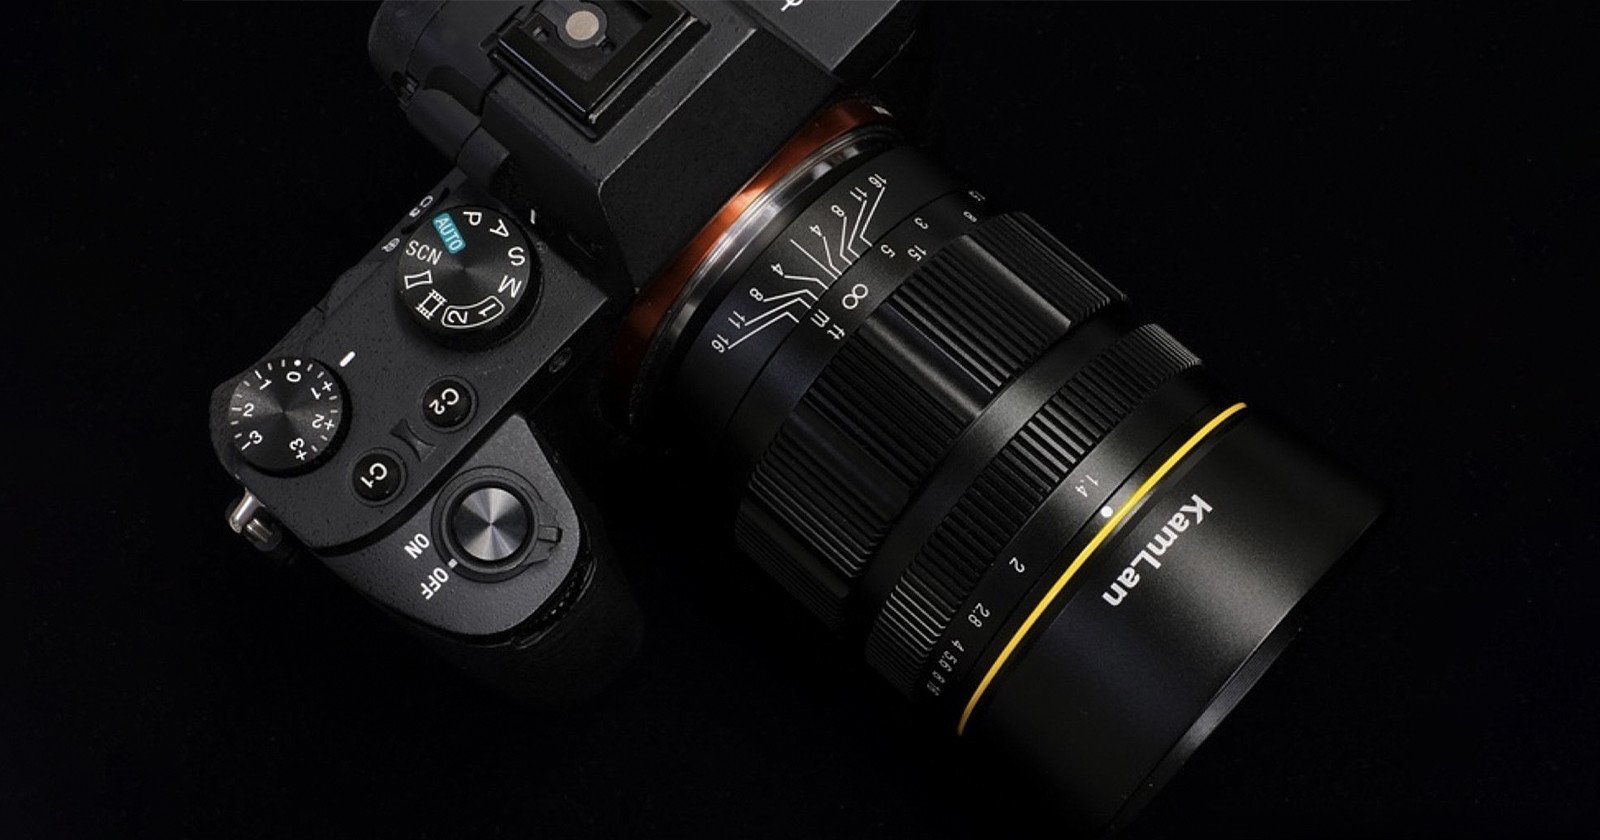  kamlan unveils 55mm full frame lens sony 